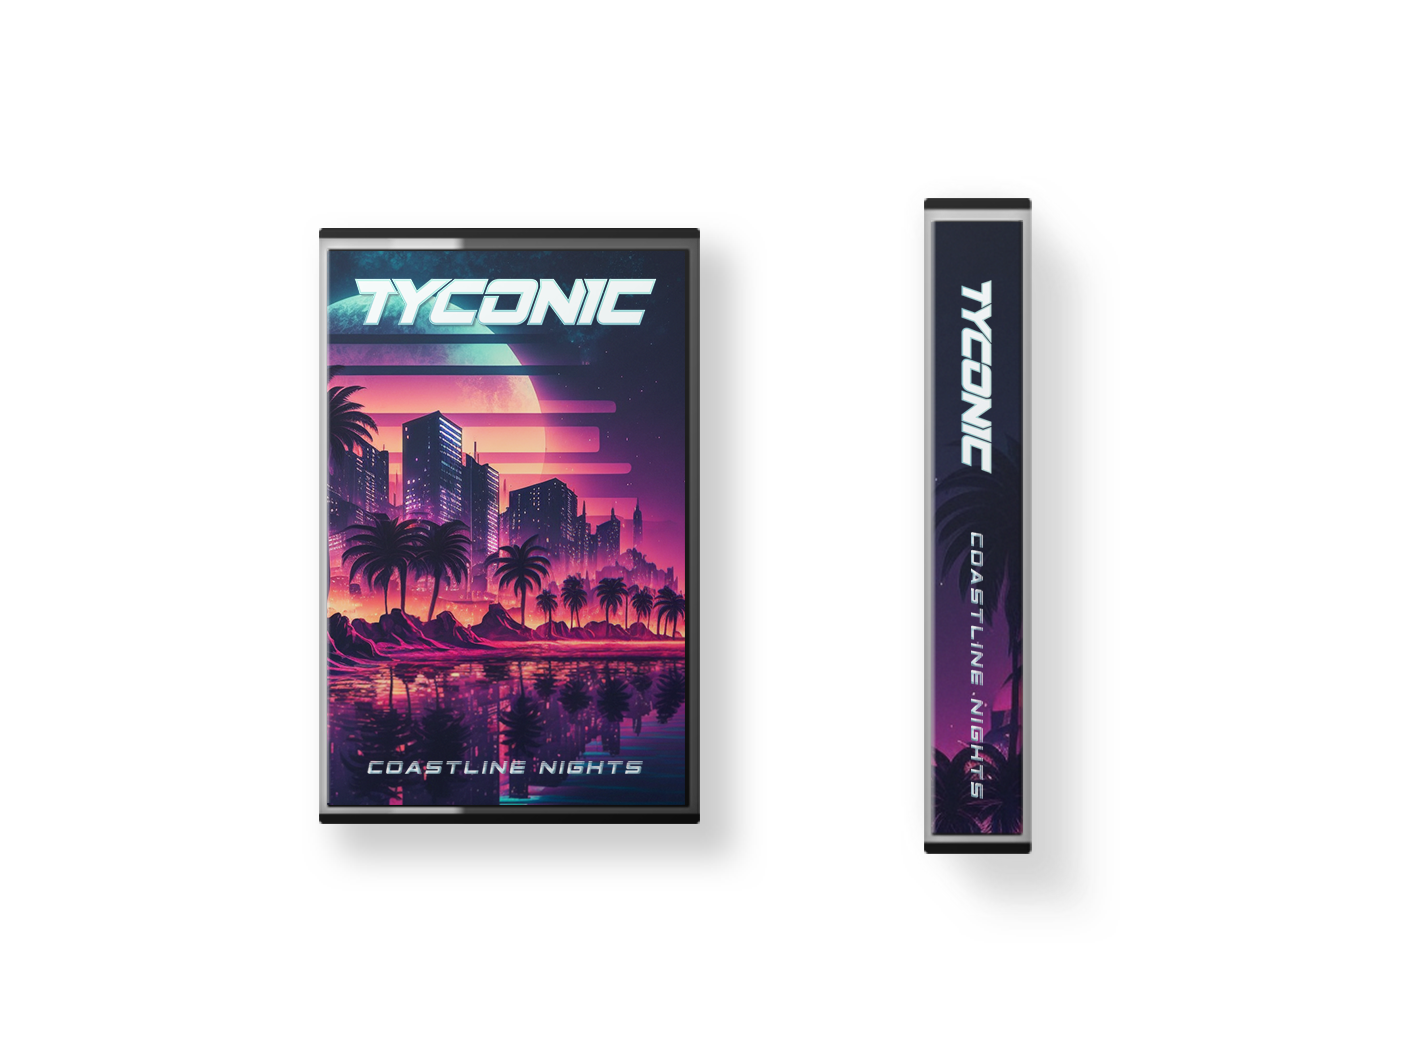 Tyconic: Coastline Nights - Cassette